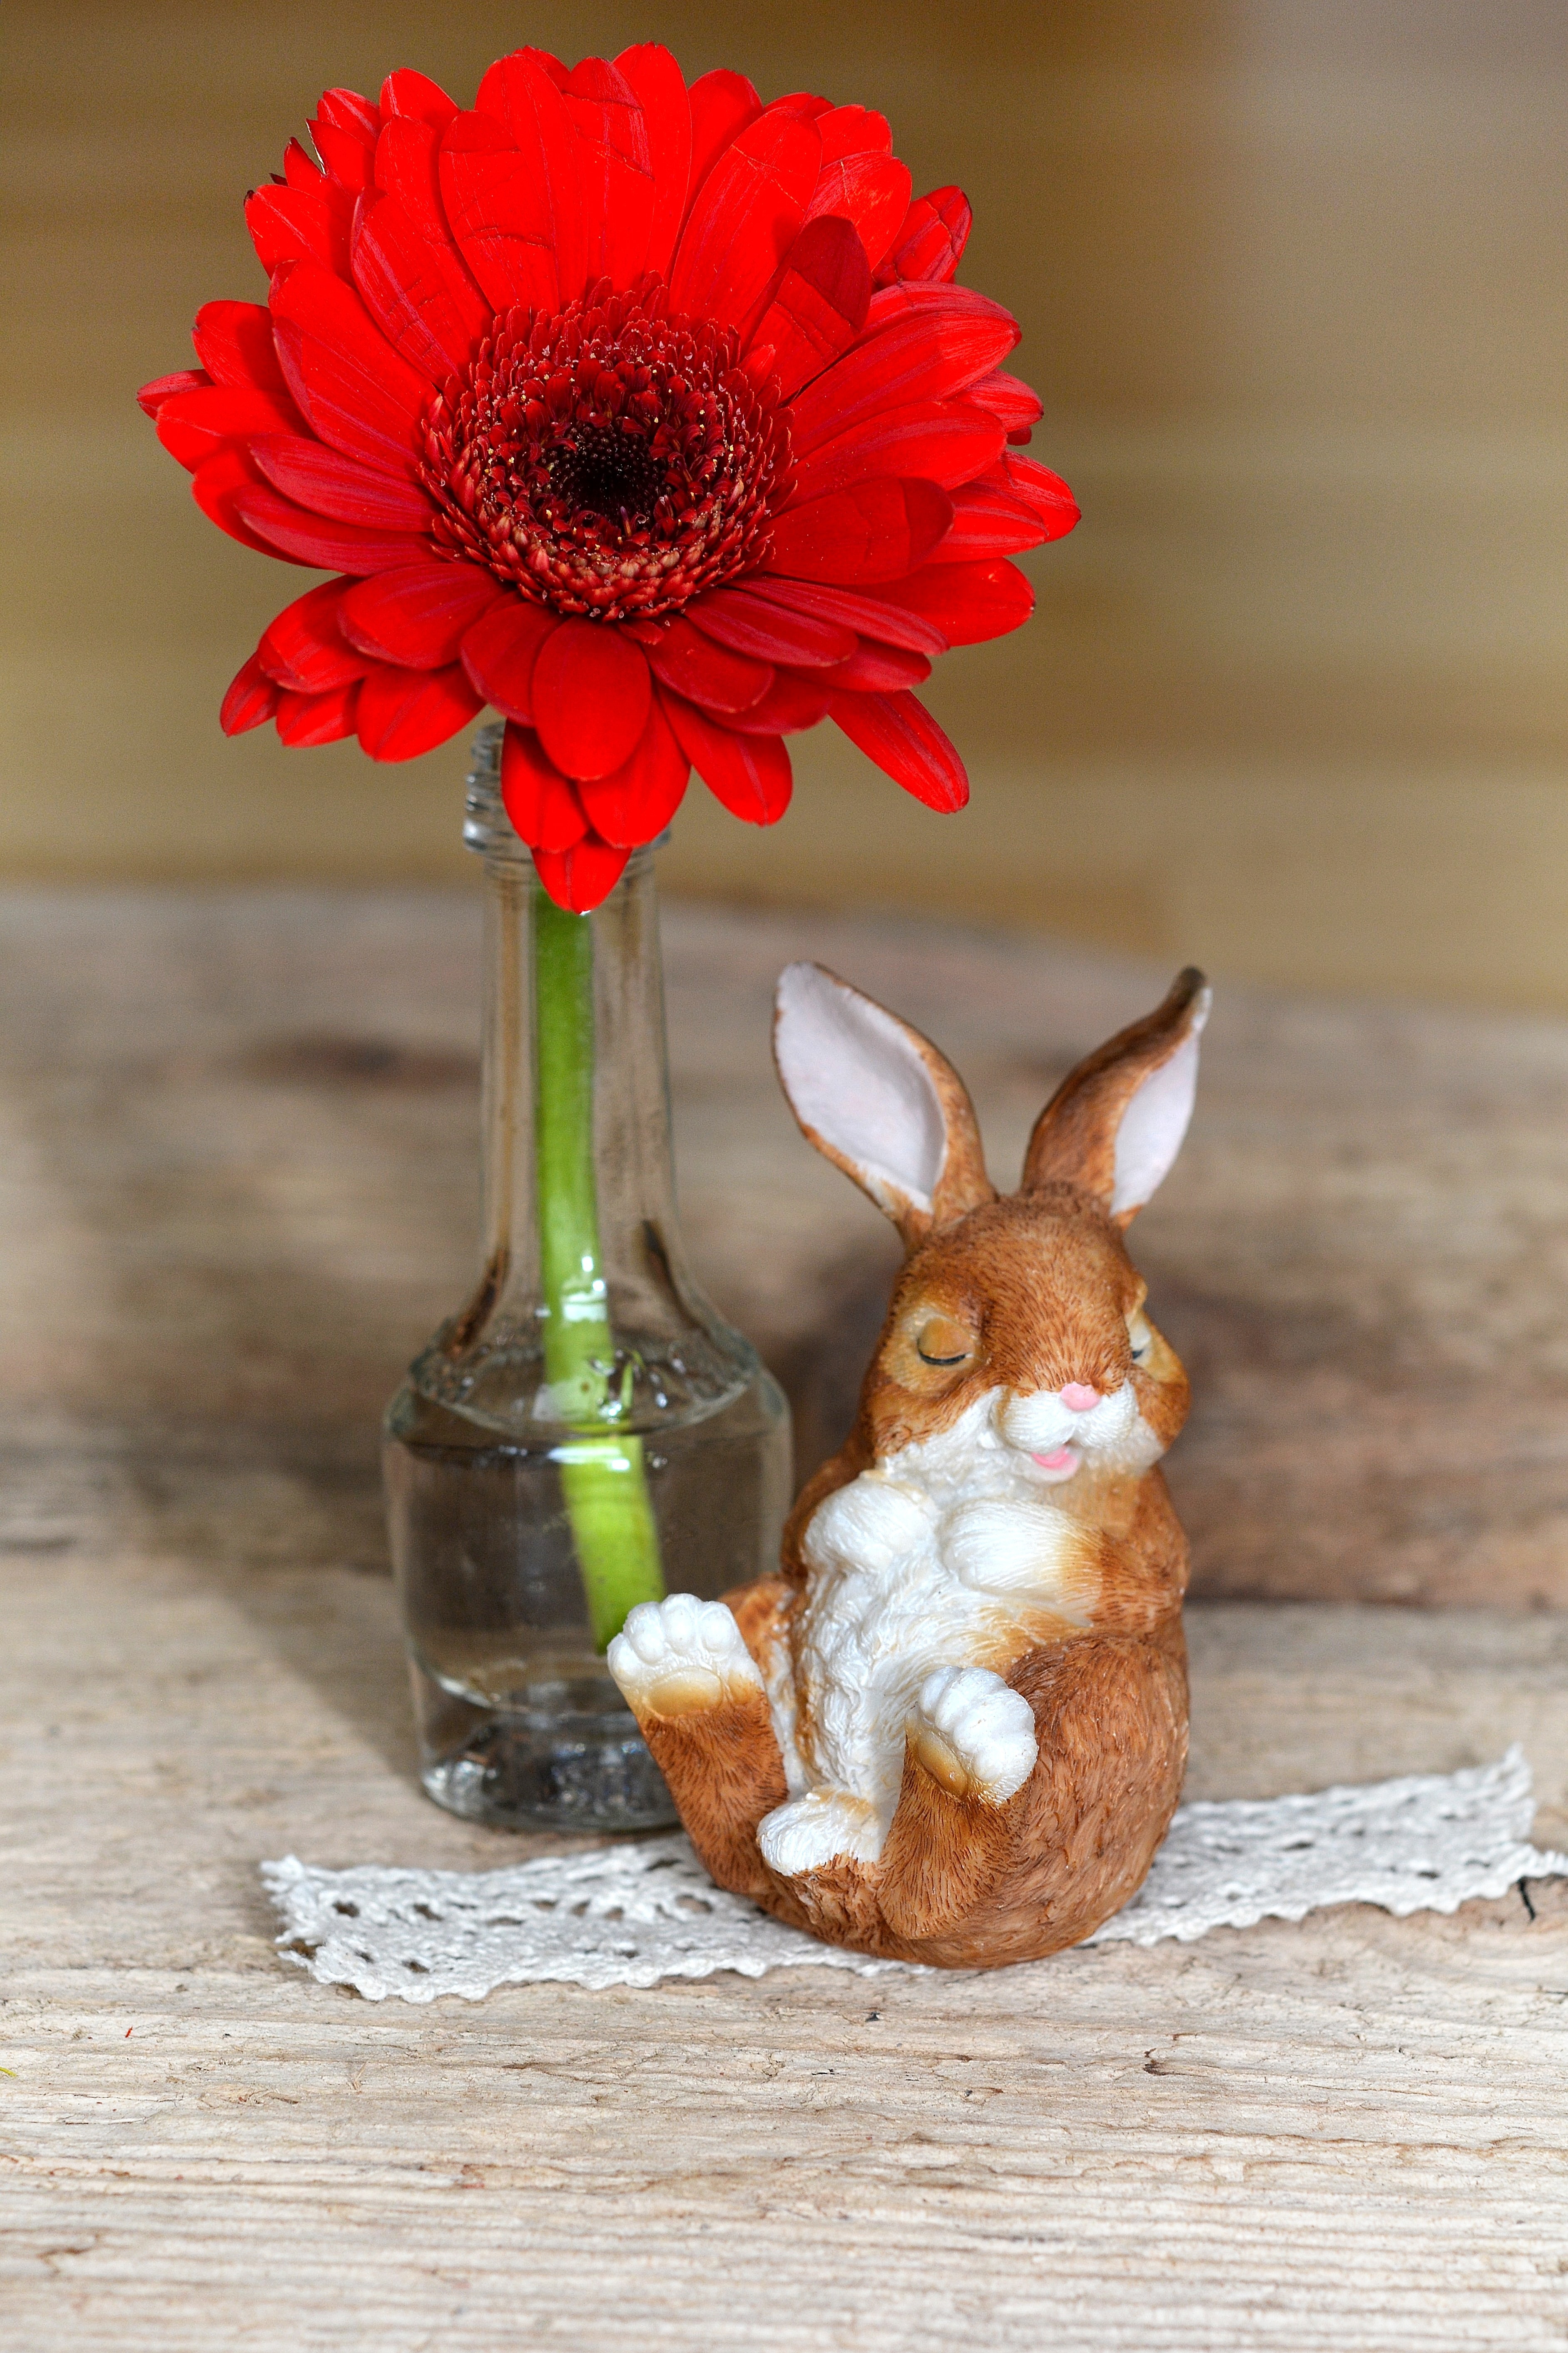 red gerbera daisy and brown bunny figurine